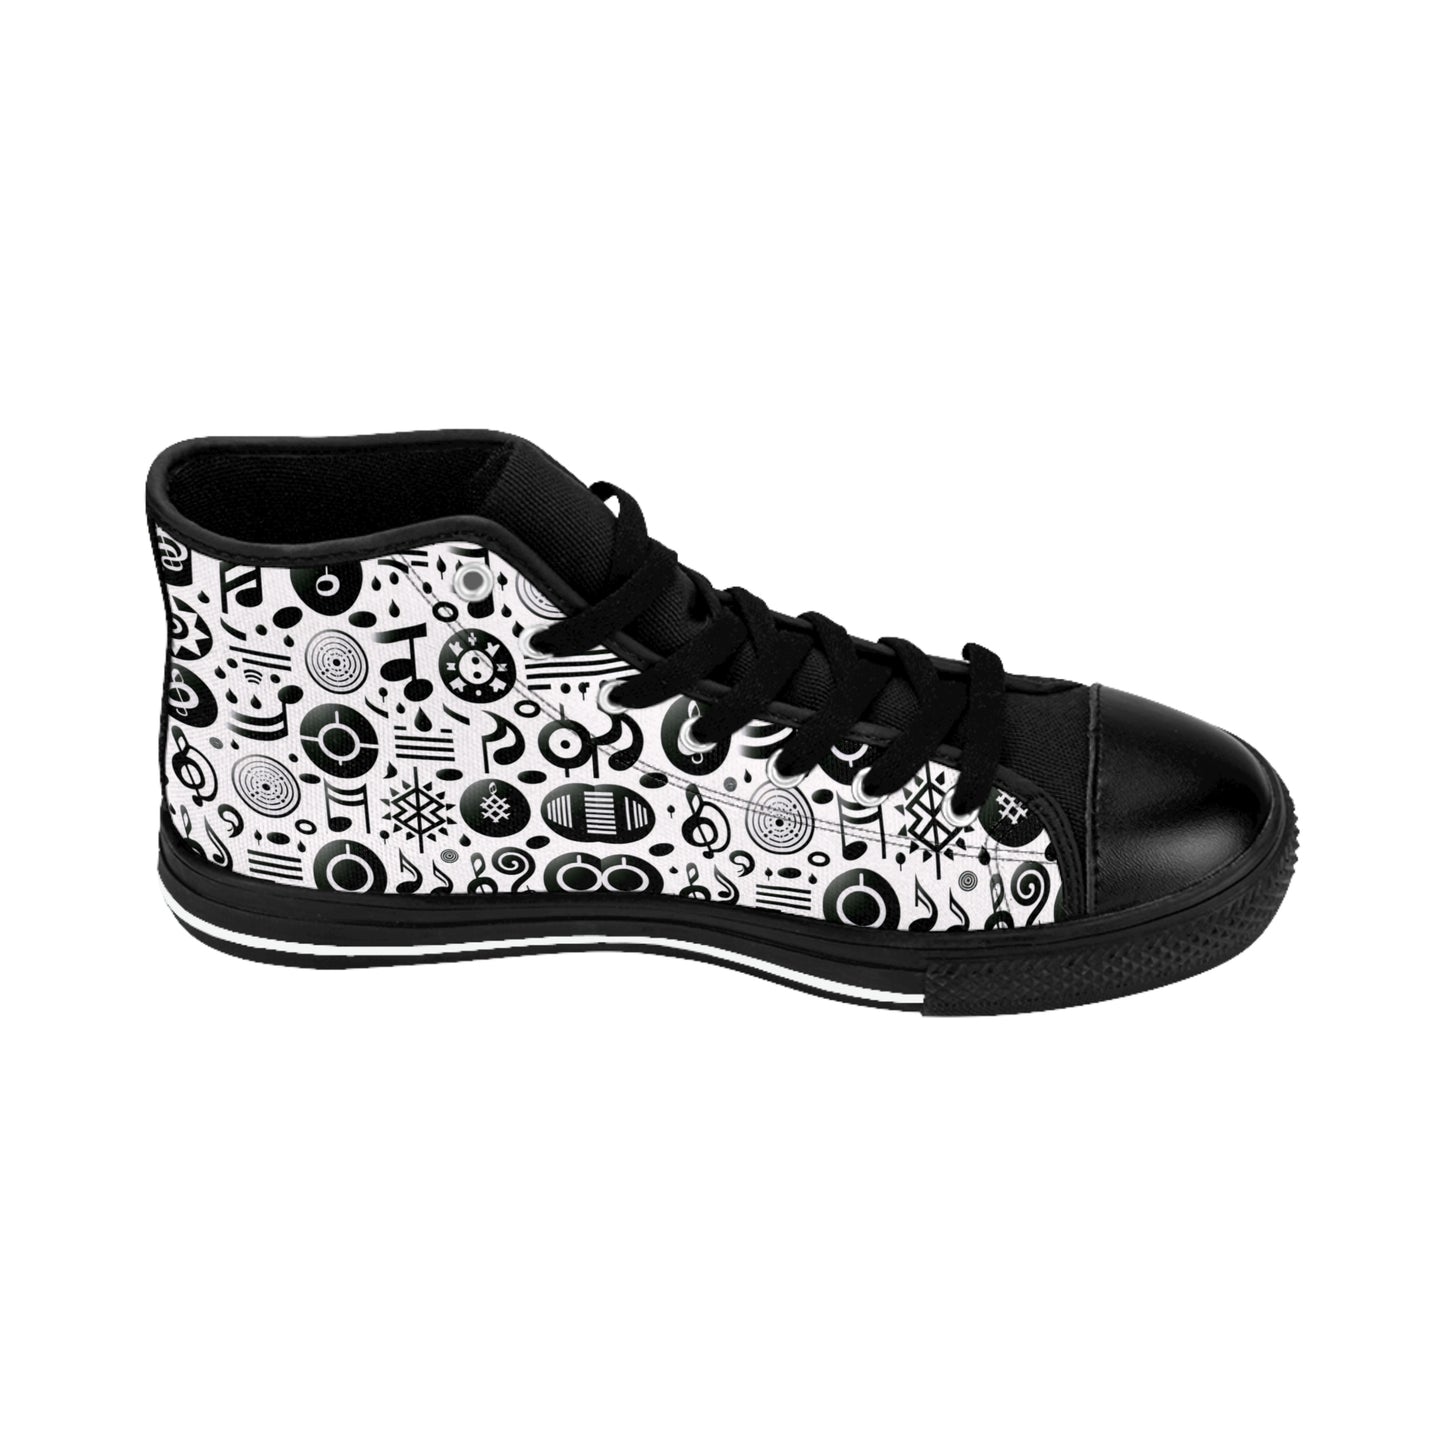 Music Black & White pattern - Men's High-Top Sneakers